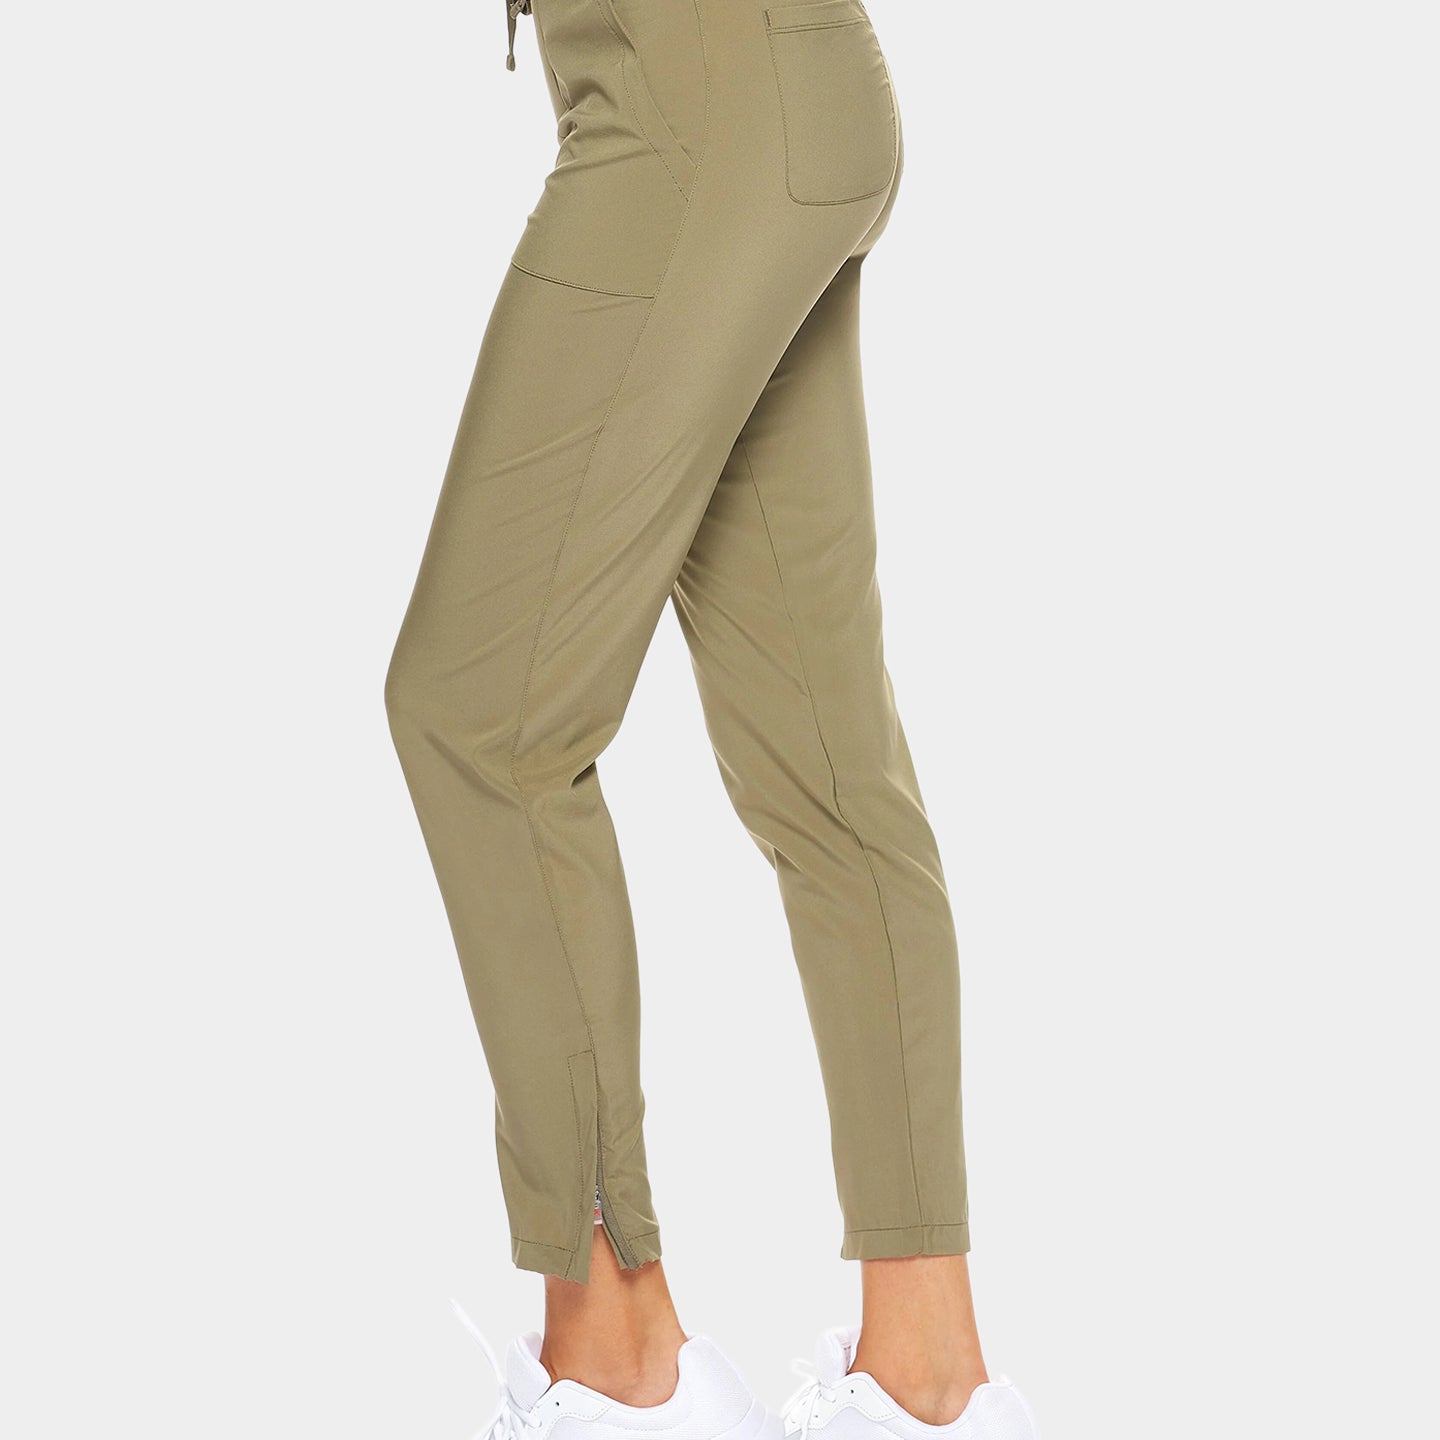 Expert Brand Women's Peformance City Pants, XXL, Olive Green A1